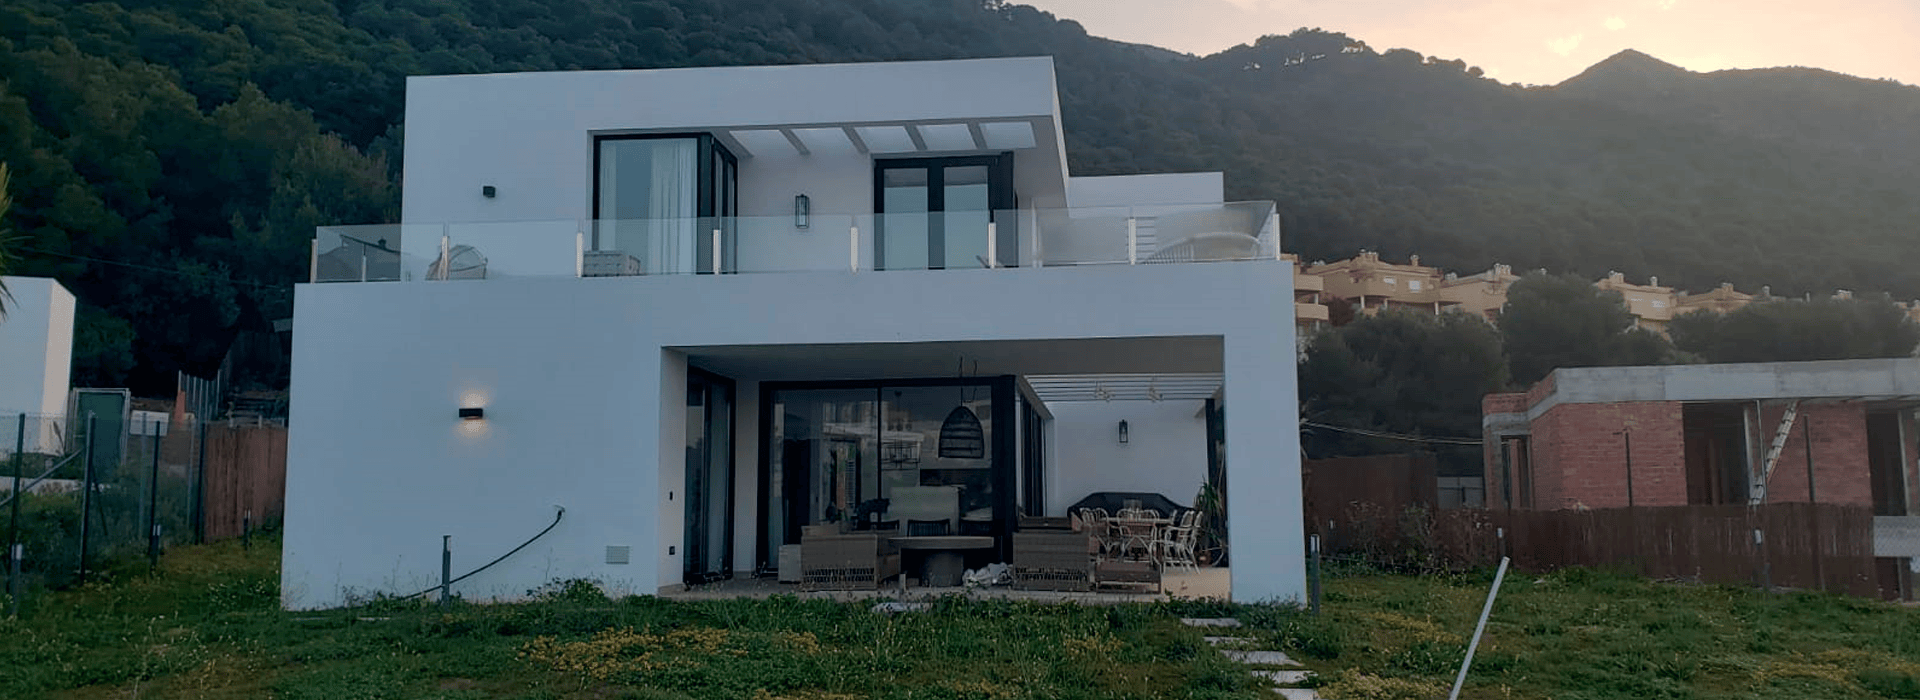 Arquitectura moderna villa familiar con vistas